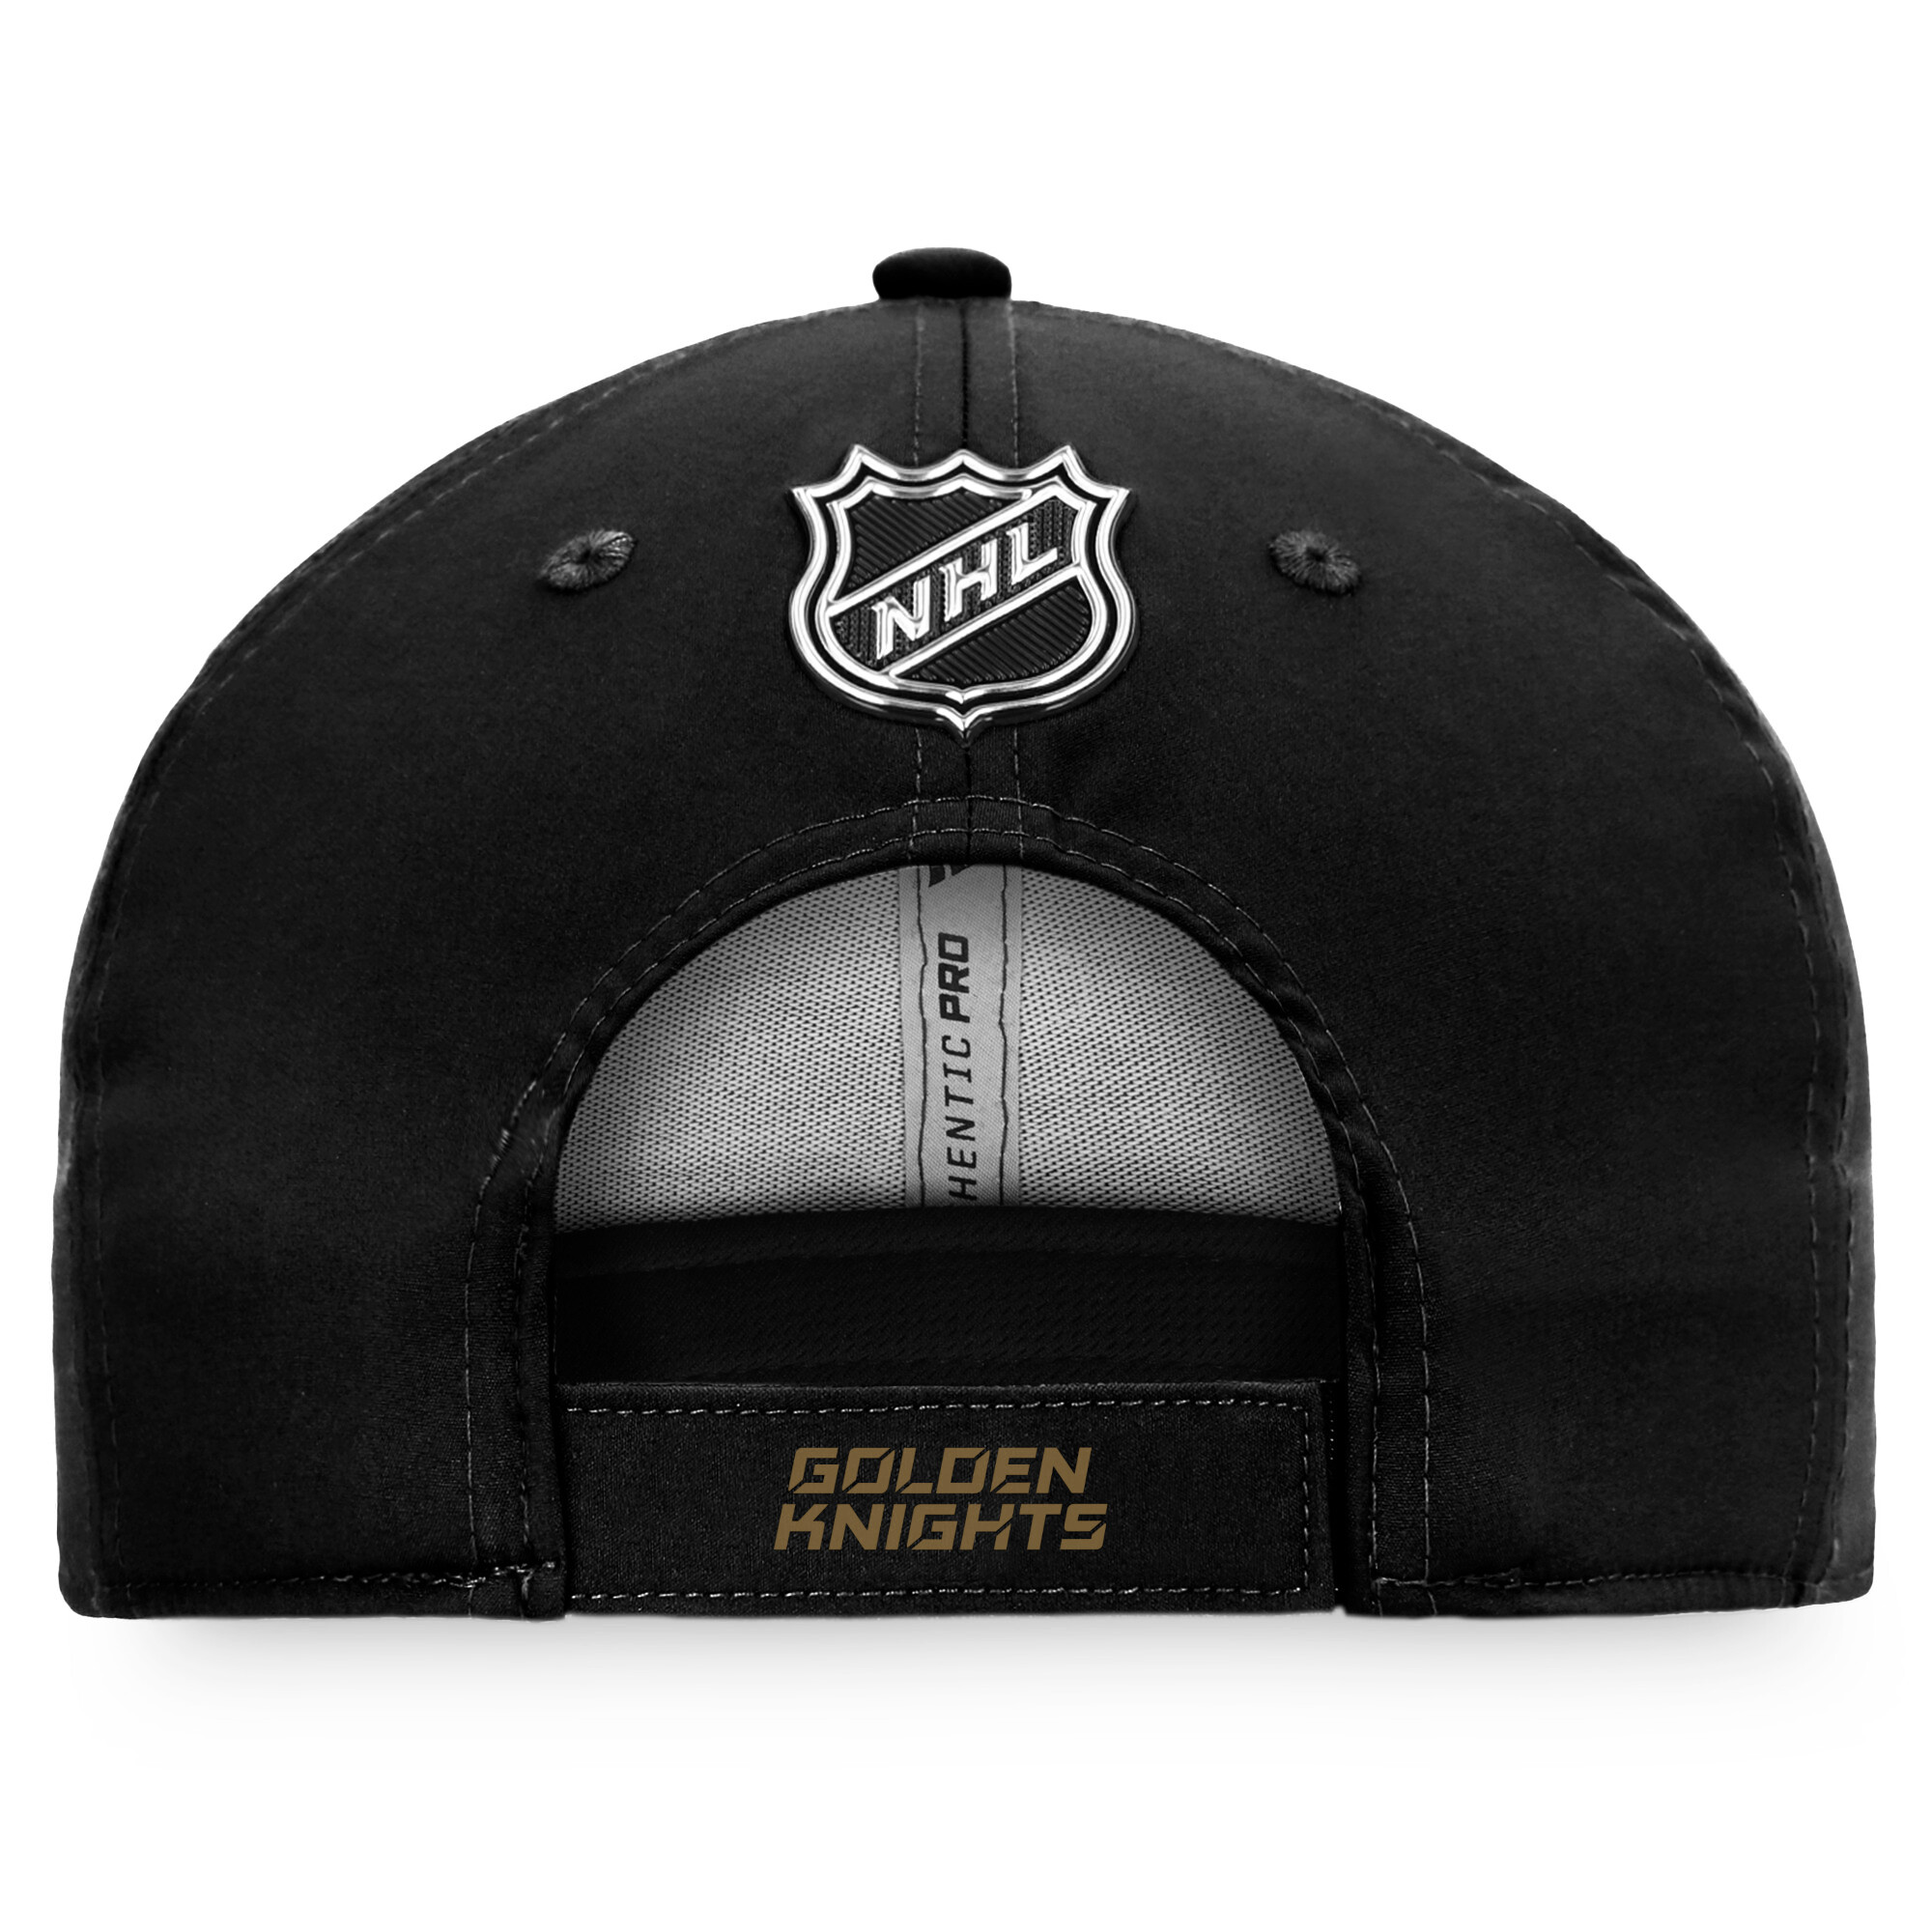 Herren Kappe  Fanatics  Authentic Pro Locker Room Structured Adjustable Cap NHL Vegas Golden Knights